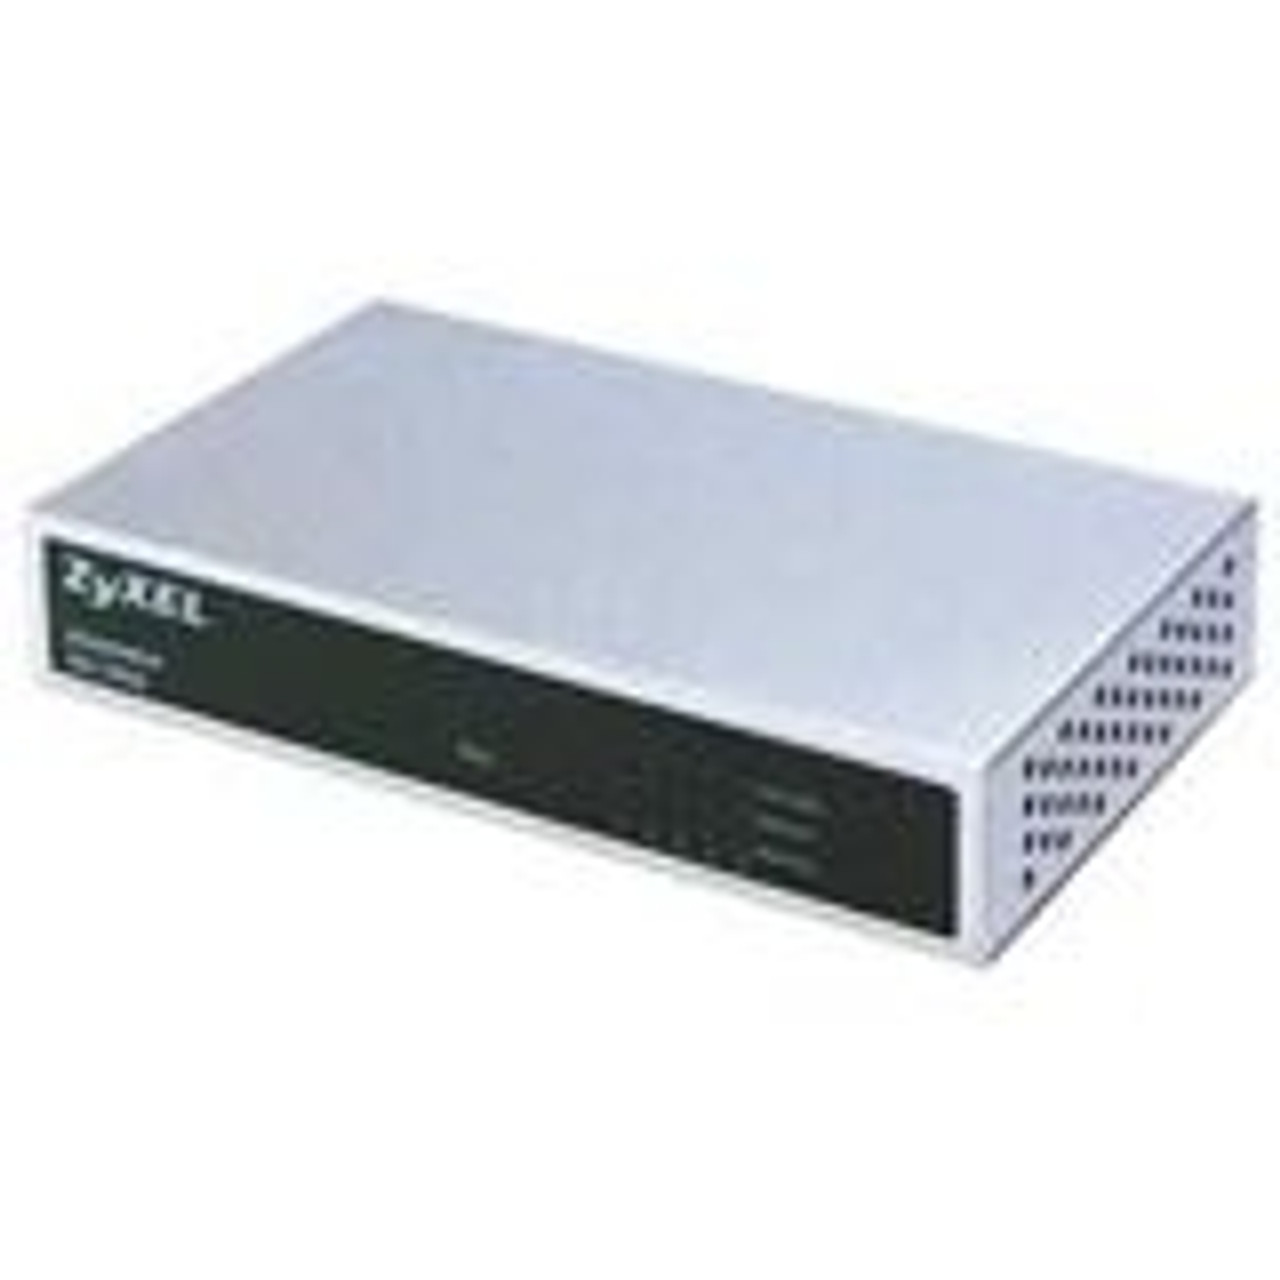 GS-105A Zyxel Desktop Gigabit Ethernet Switch (Refurbished)